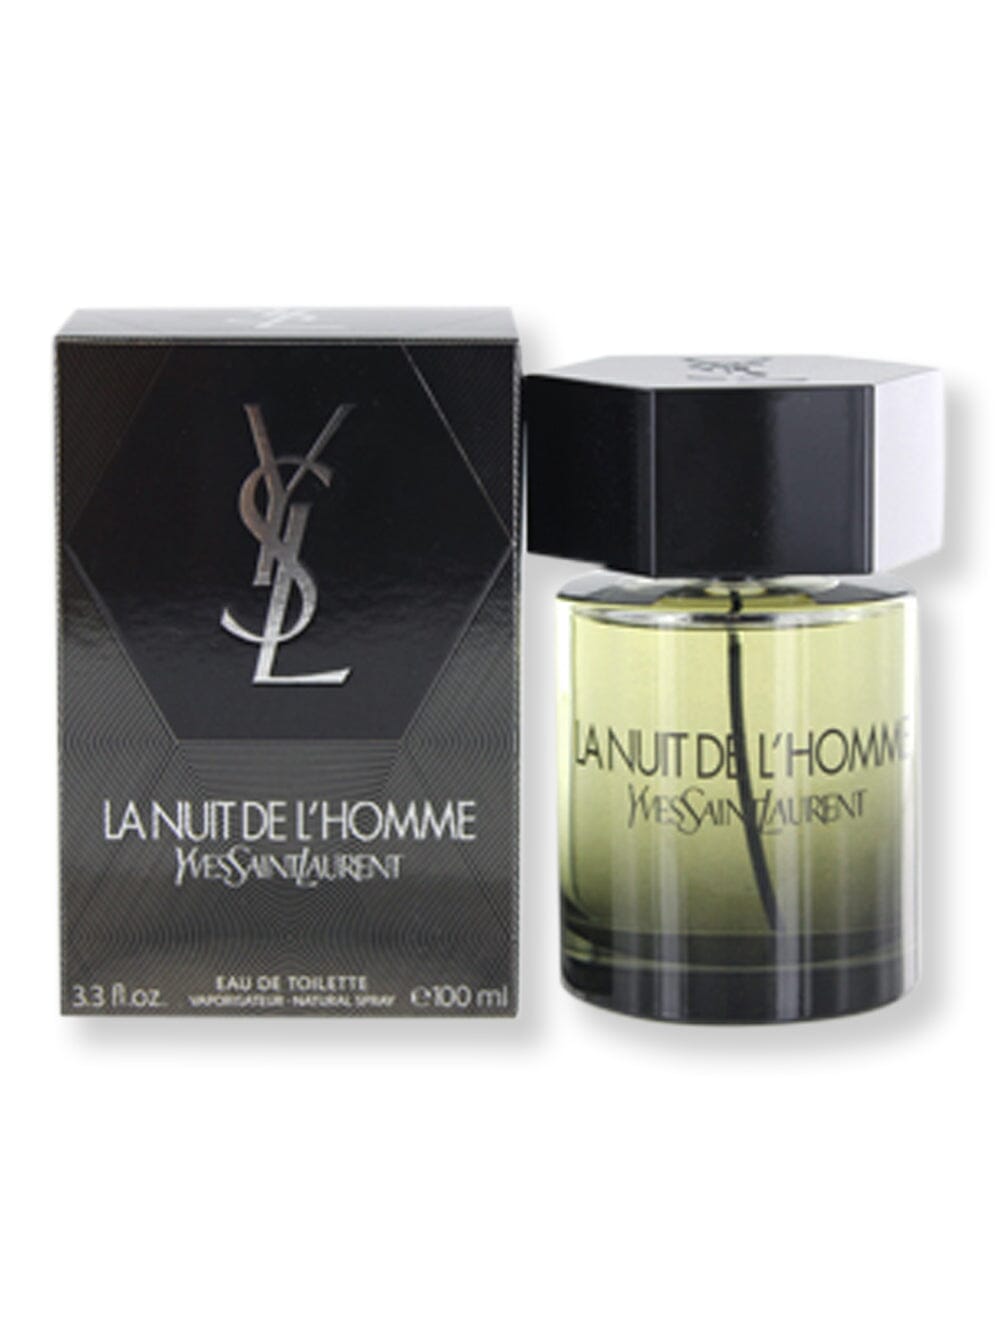 Yves Saint Laurent Yves Saint Laurent Lanuit De L'homme EDT Spray 3.3 oz100 ml Perfume 